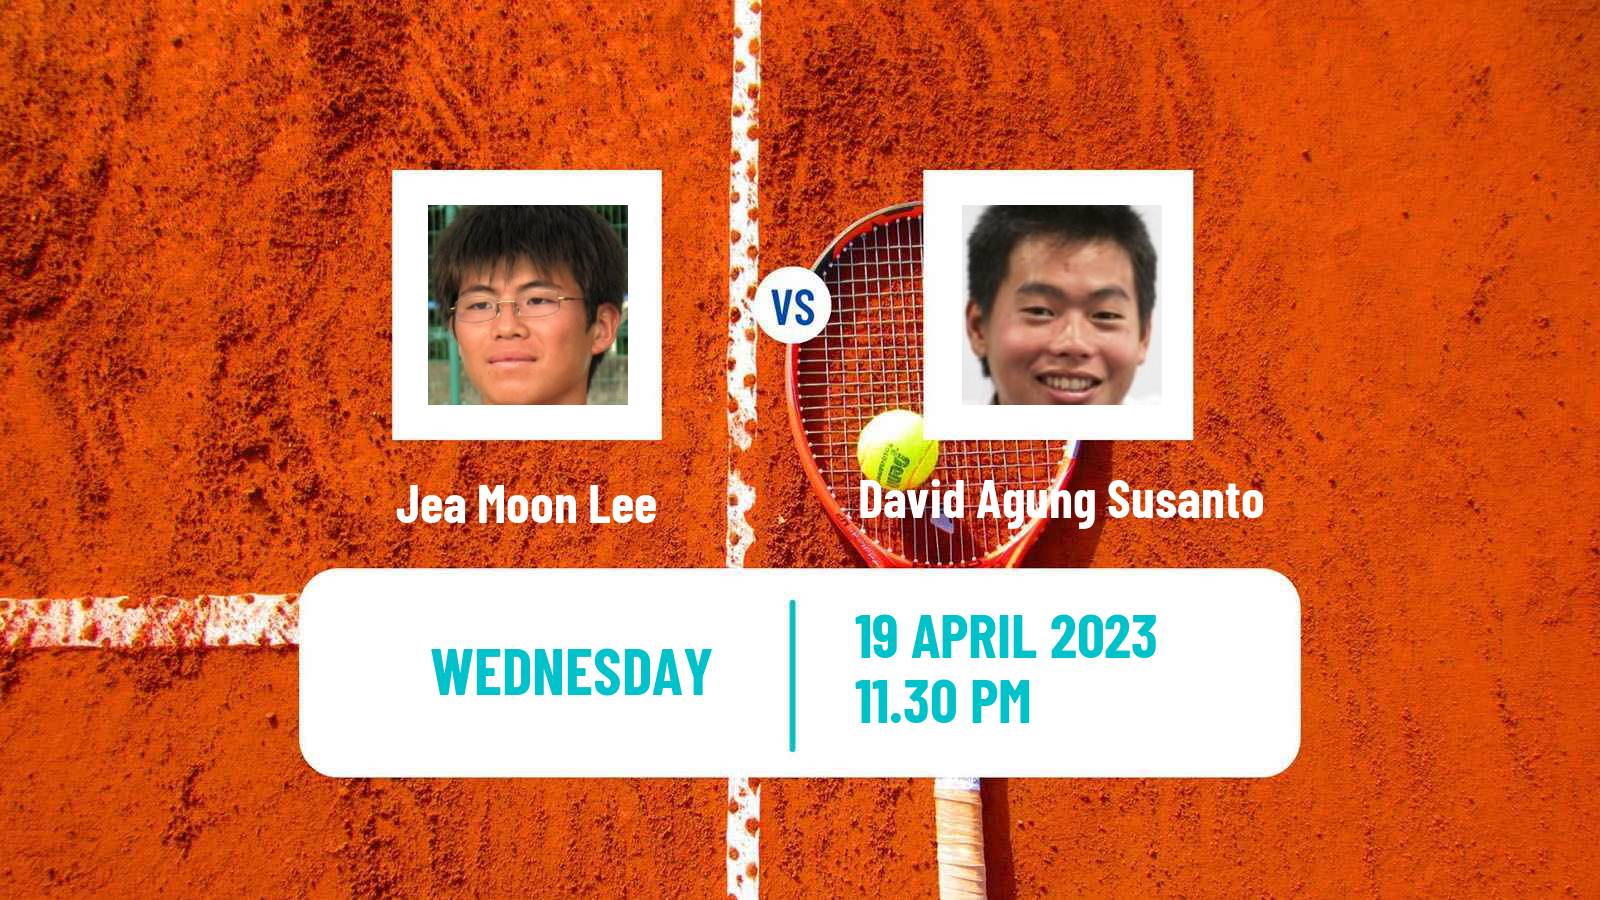 Tennis ITF Tournaments Jea Moon Lee - David Agung Susanto